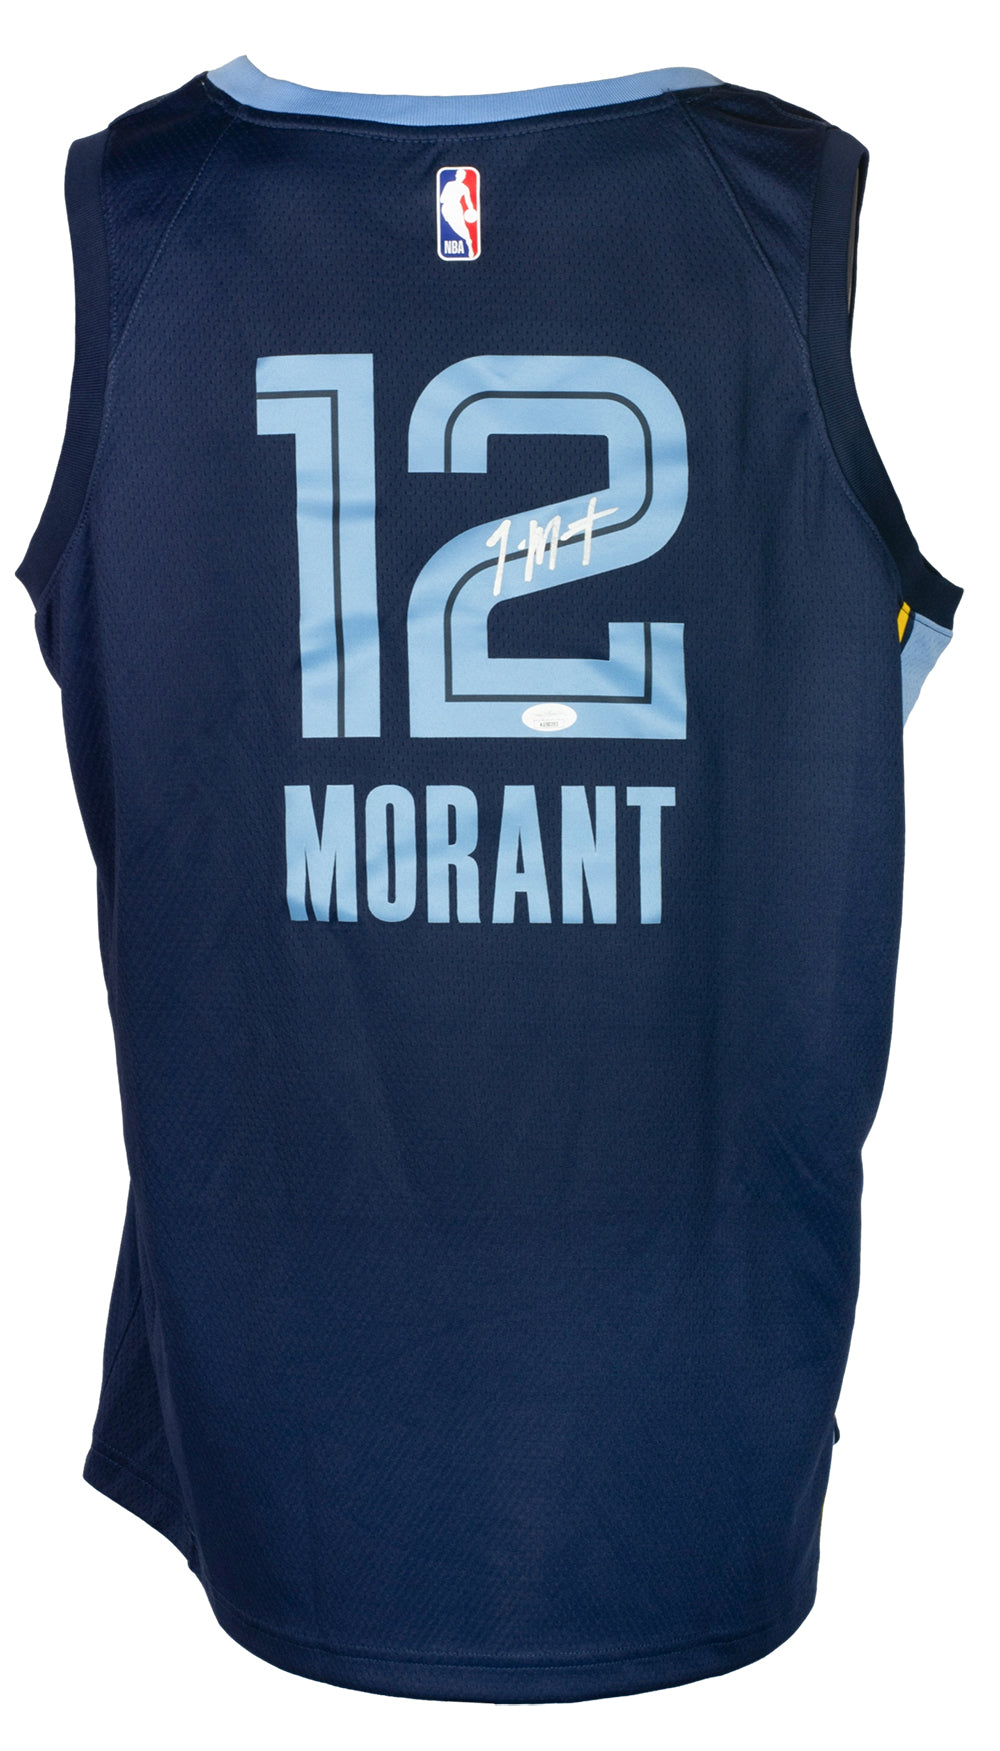 RSA Ja Morant Signed Memphis Blue Basketball Jersey (JSA)